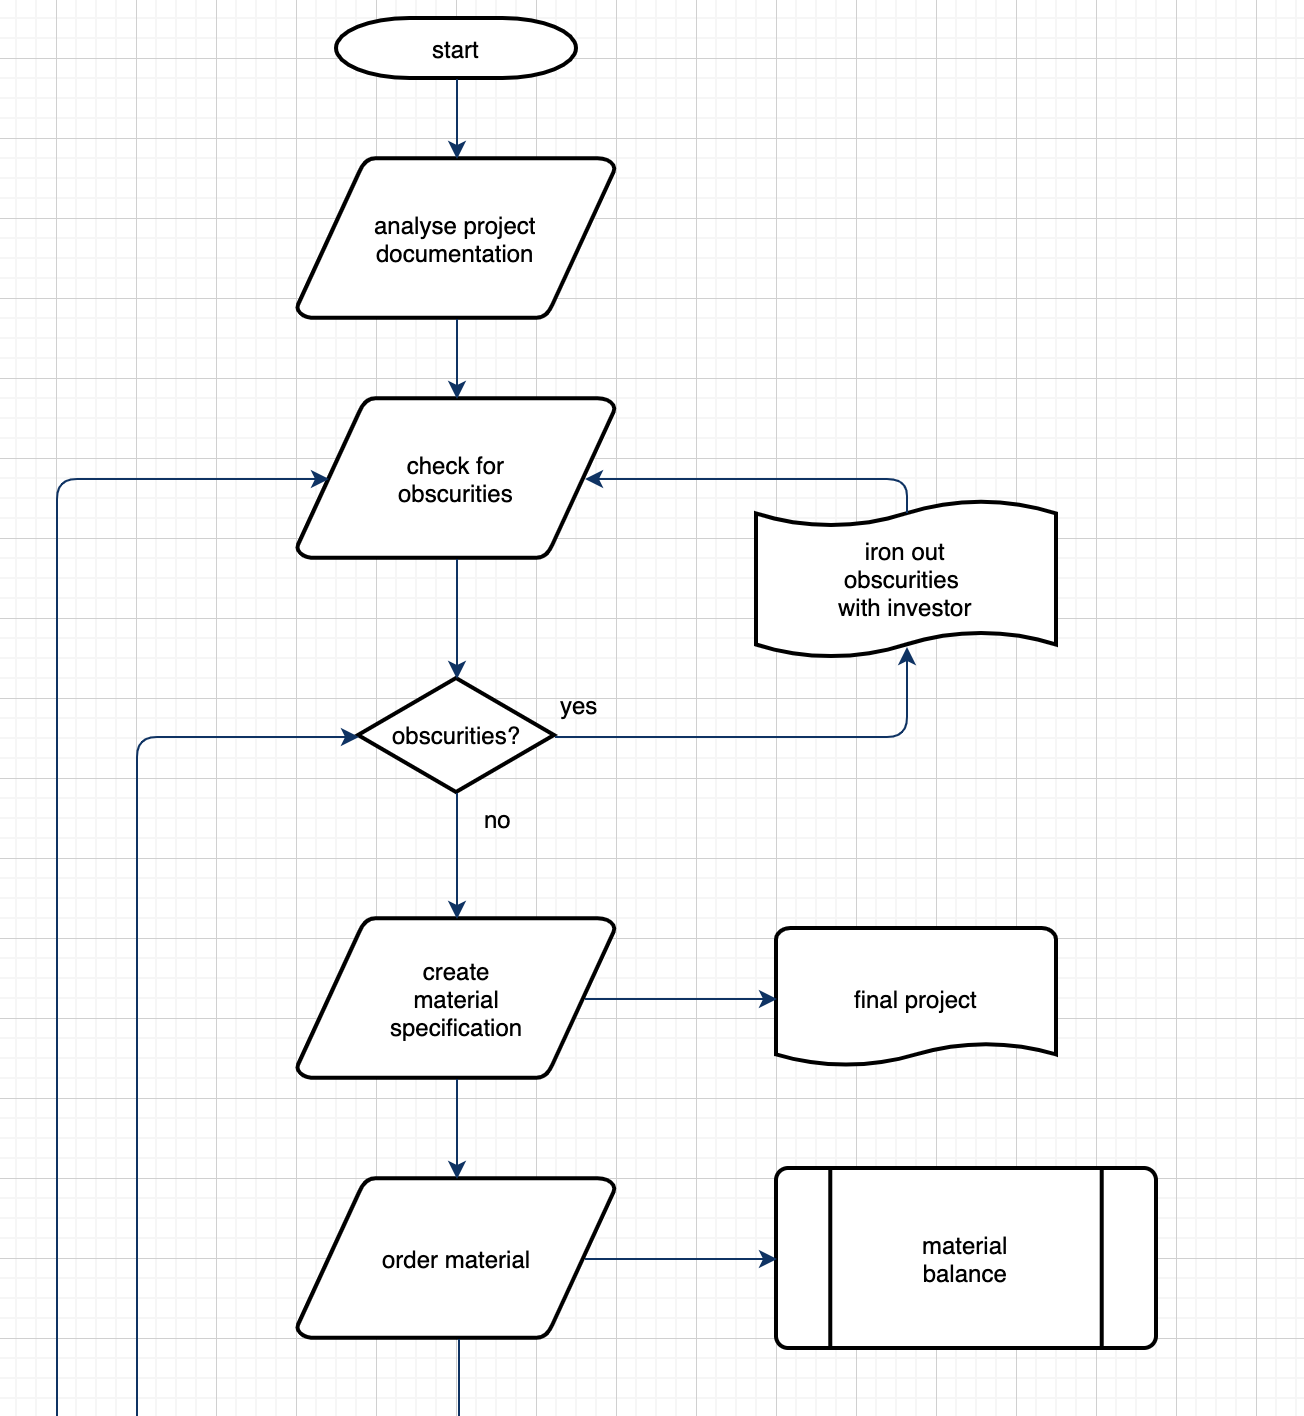 Example of process mapping by flowchart (https://inzynierjakosci.pl/2019/12/mapowanie-procesu/).